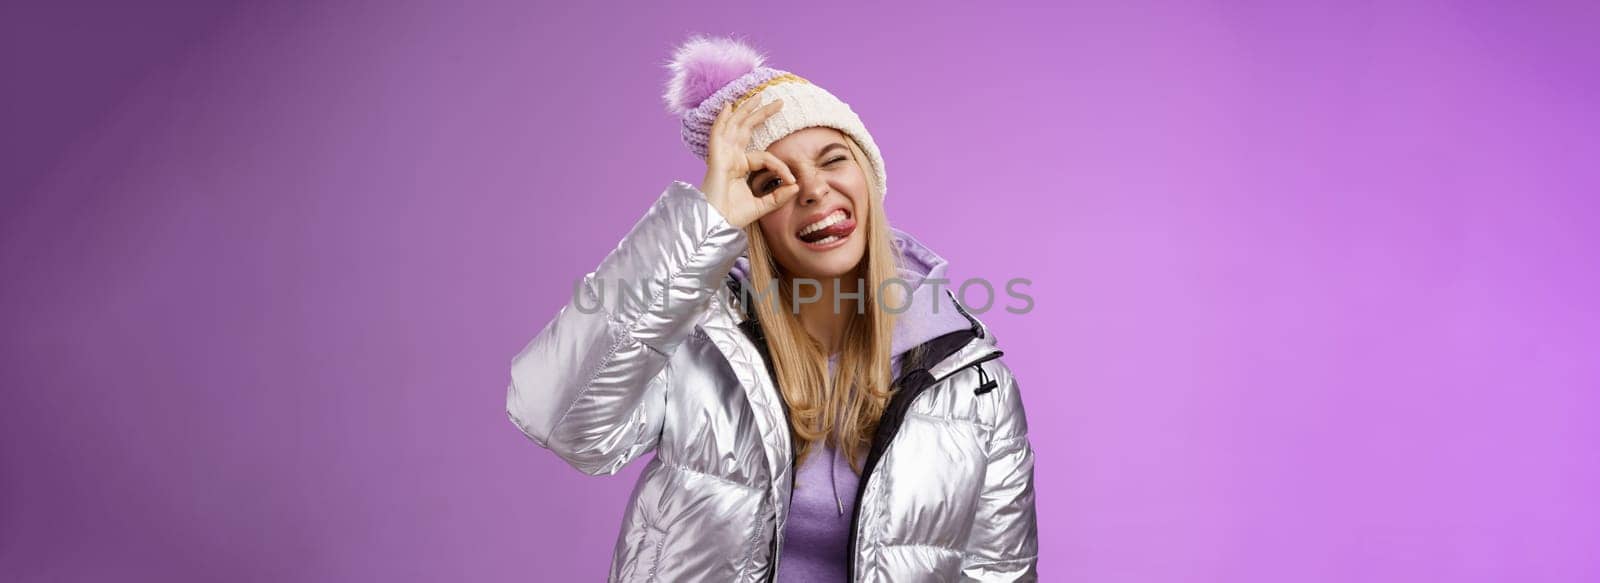 Friendly joyful caucasian blond girl in hat warm stylish shiny silver jacket tilt head happily show tongue smiling broadly enjoying awesome ski resort vacation travelling winter, purple background by Benzoix